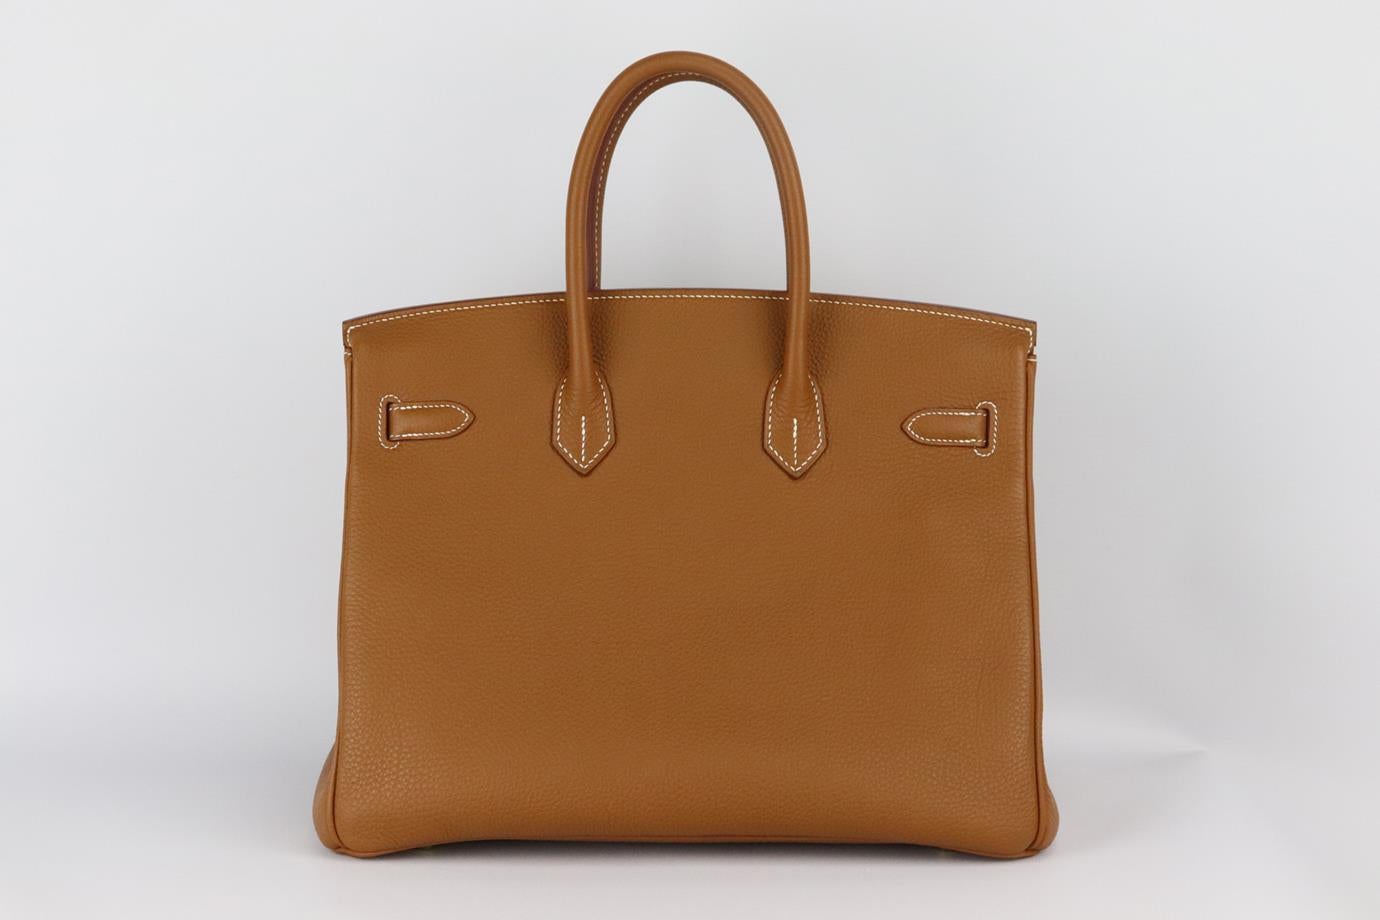 Hermès 2012 Birkin 35cm Veau Togo Leather Bag In Excellent Condition For Sale In London, GB